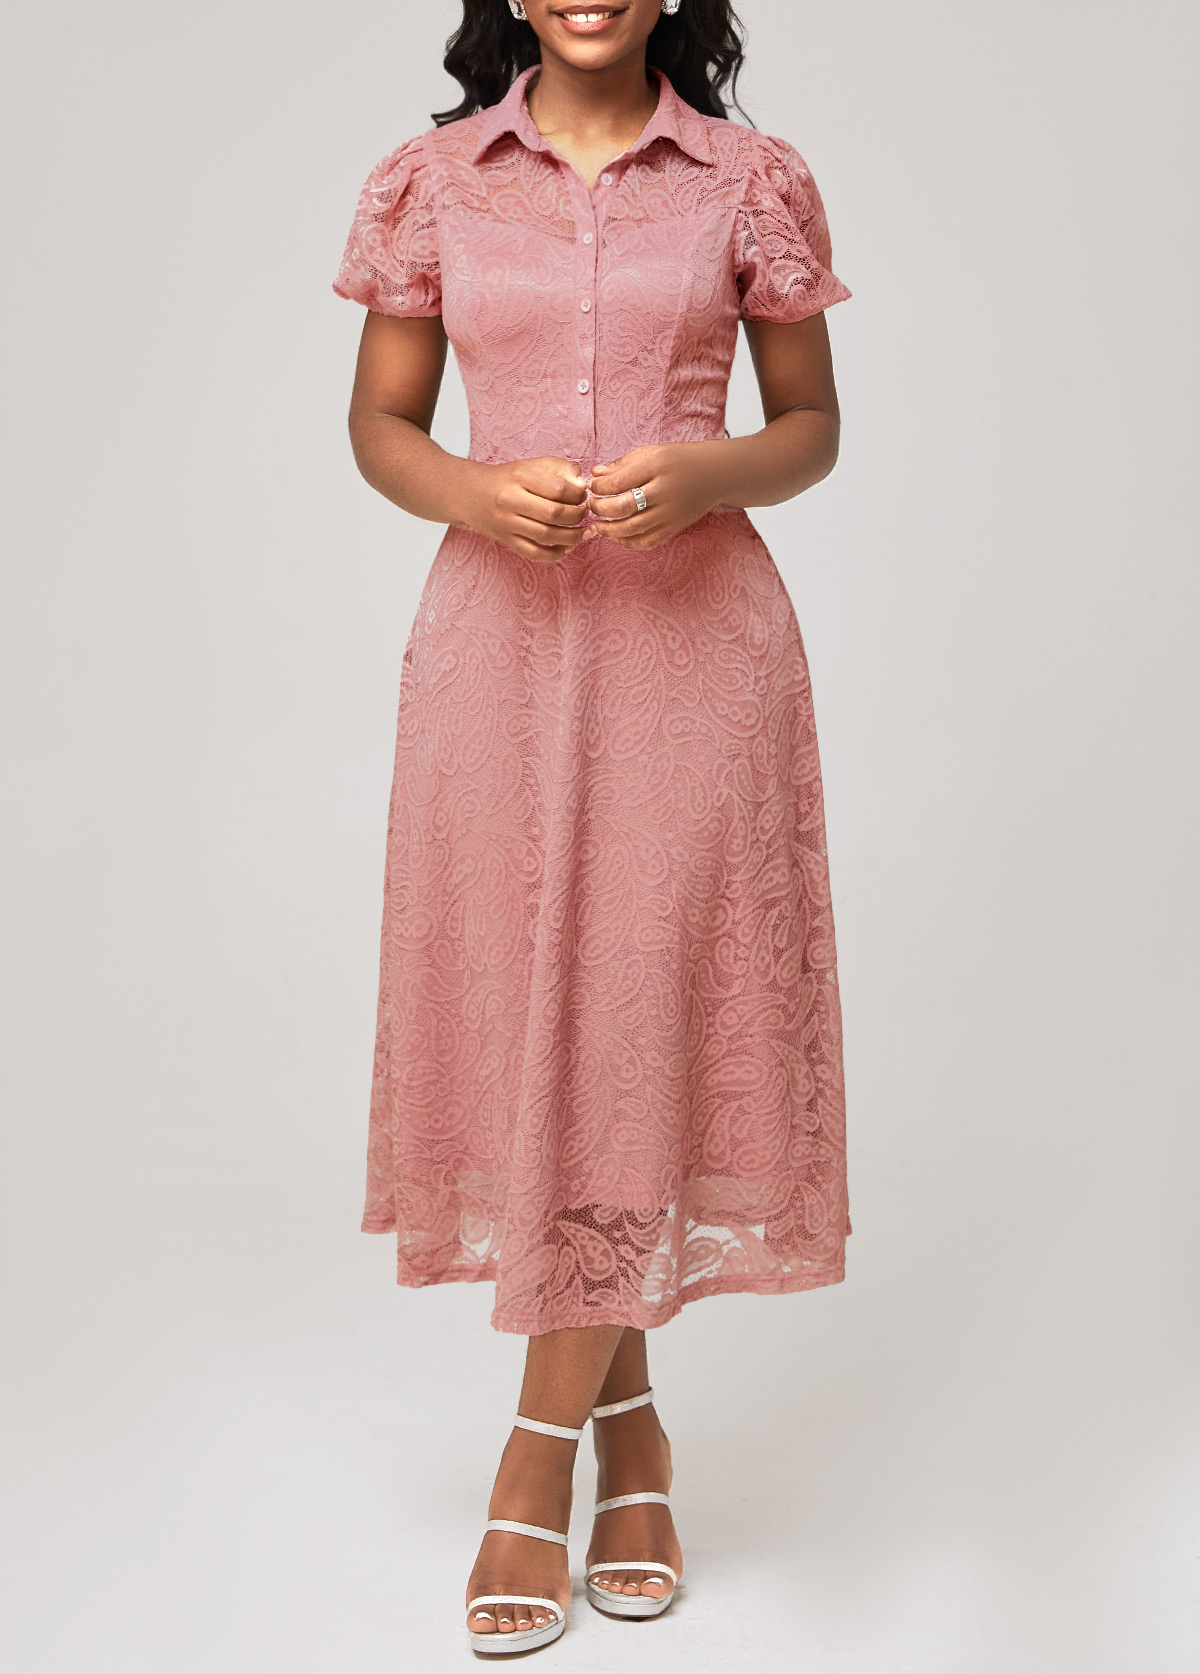 Dusty Pink Lace Short Sleeve Turndown Collar Dress